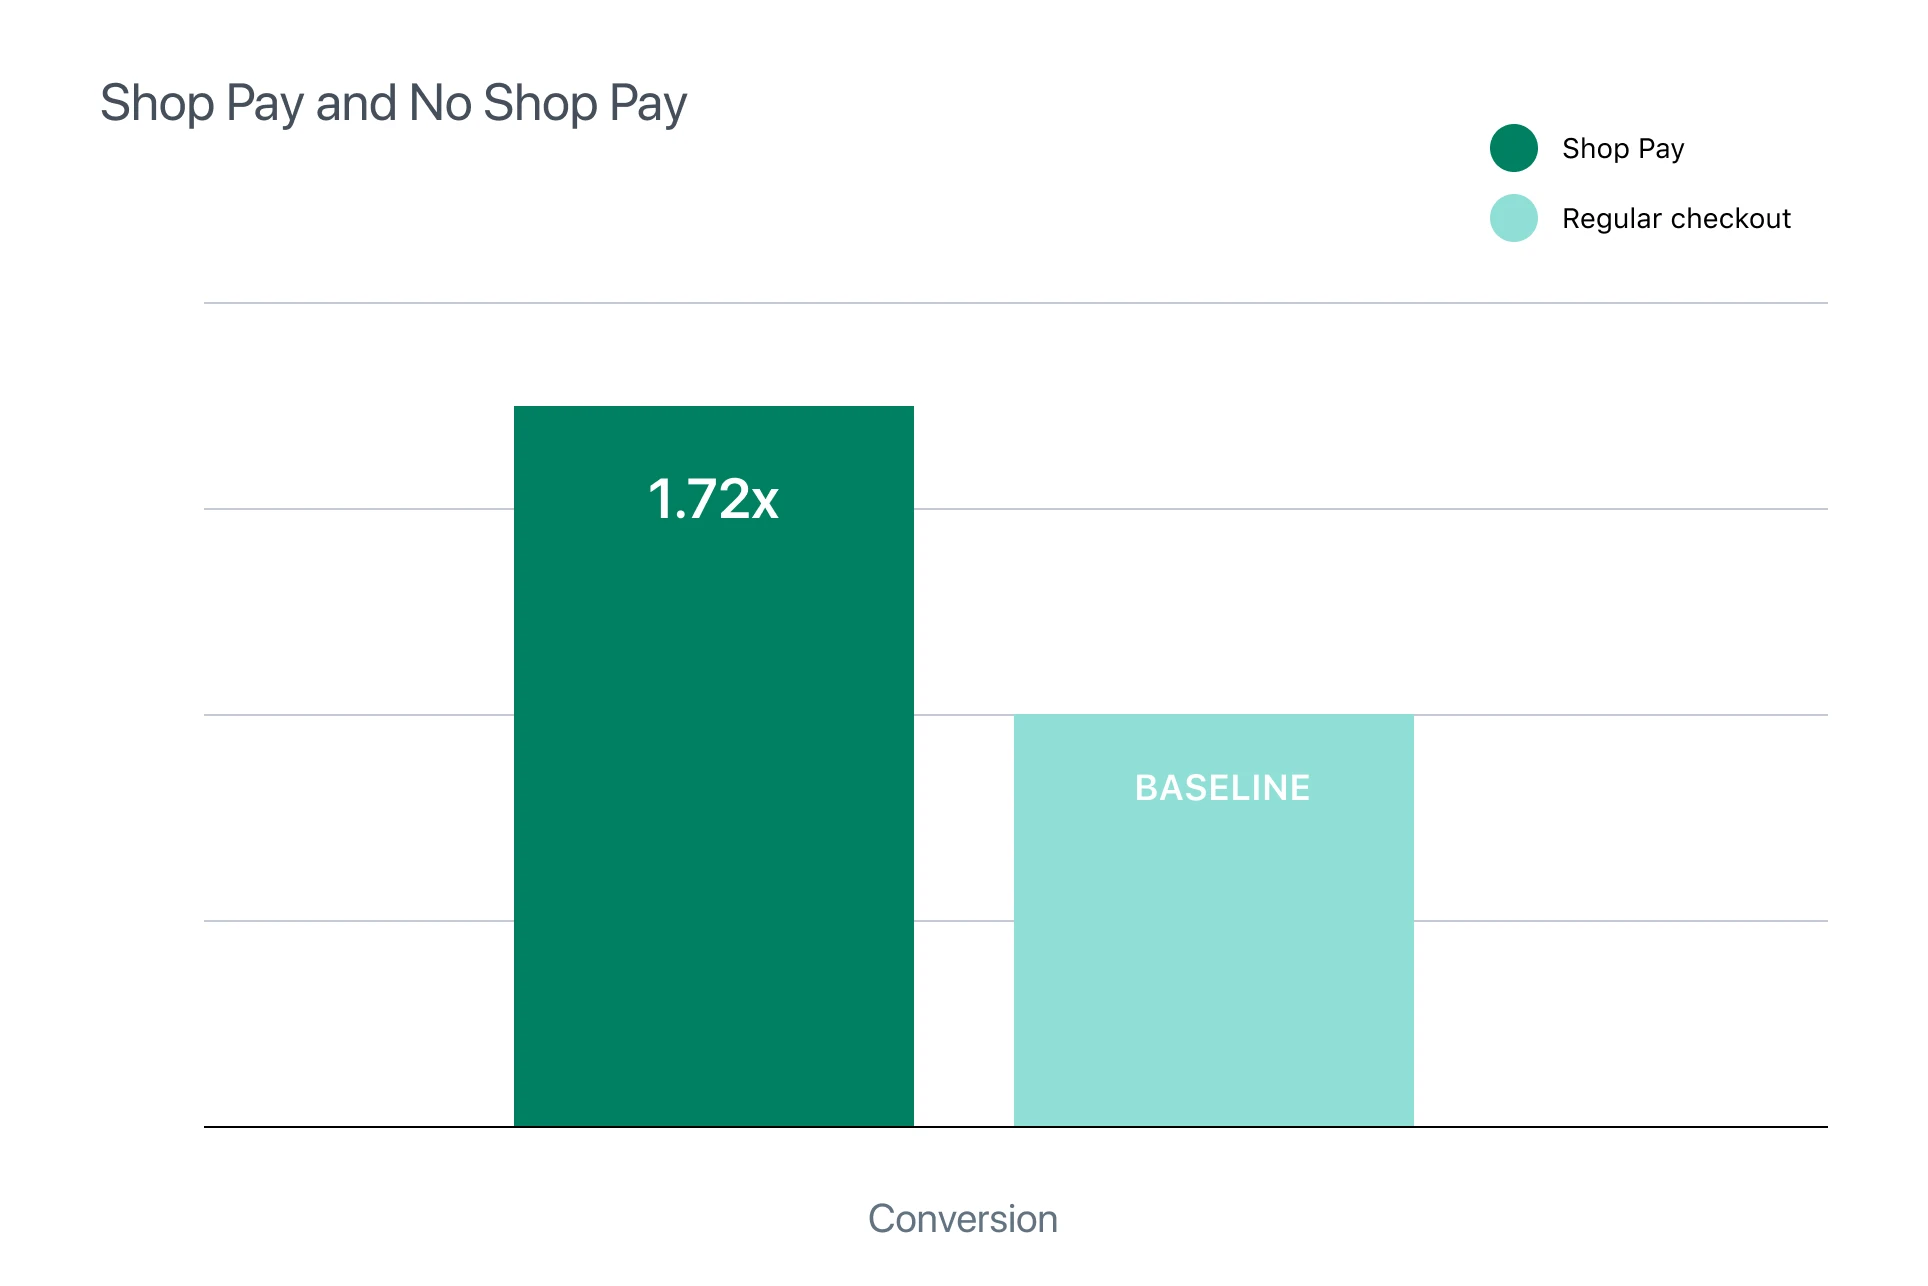 Shop Pay vs Non Shop Pay Conversion